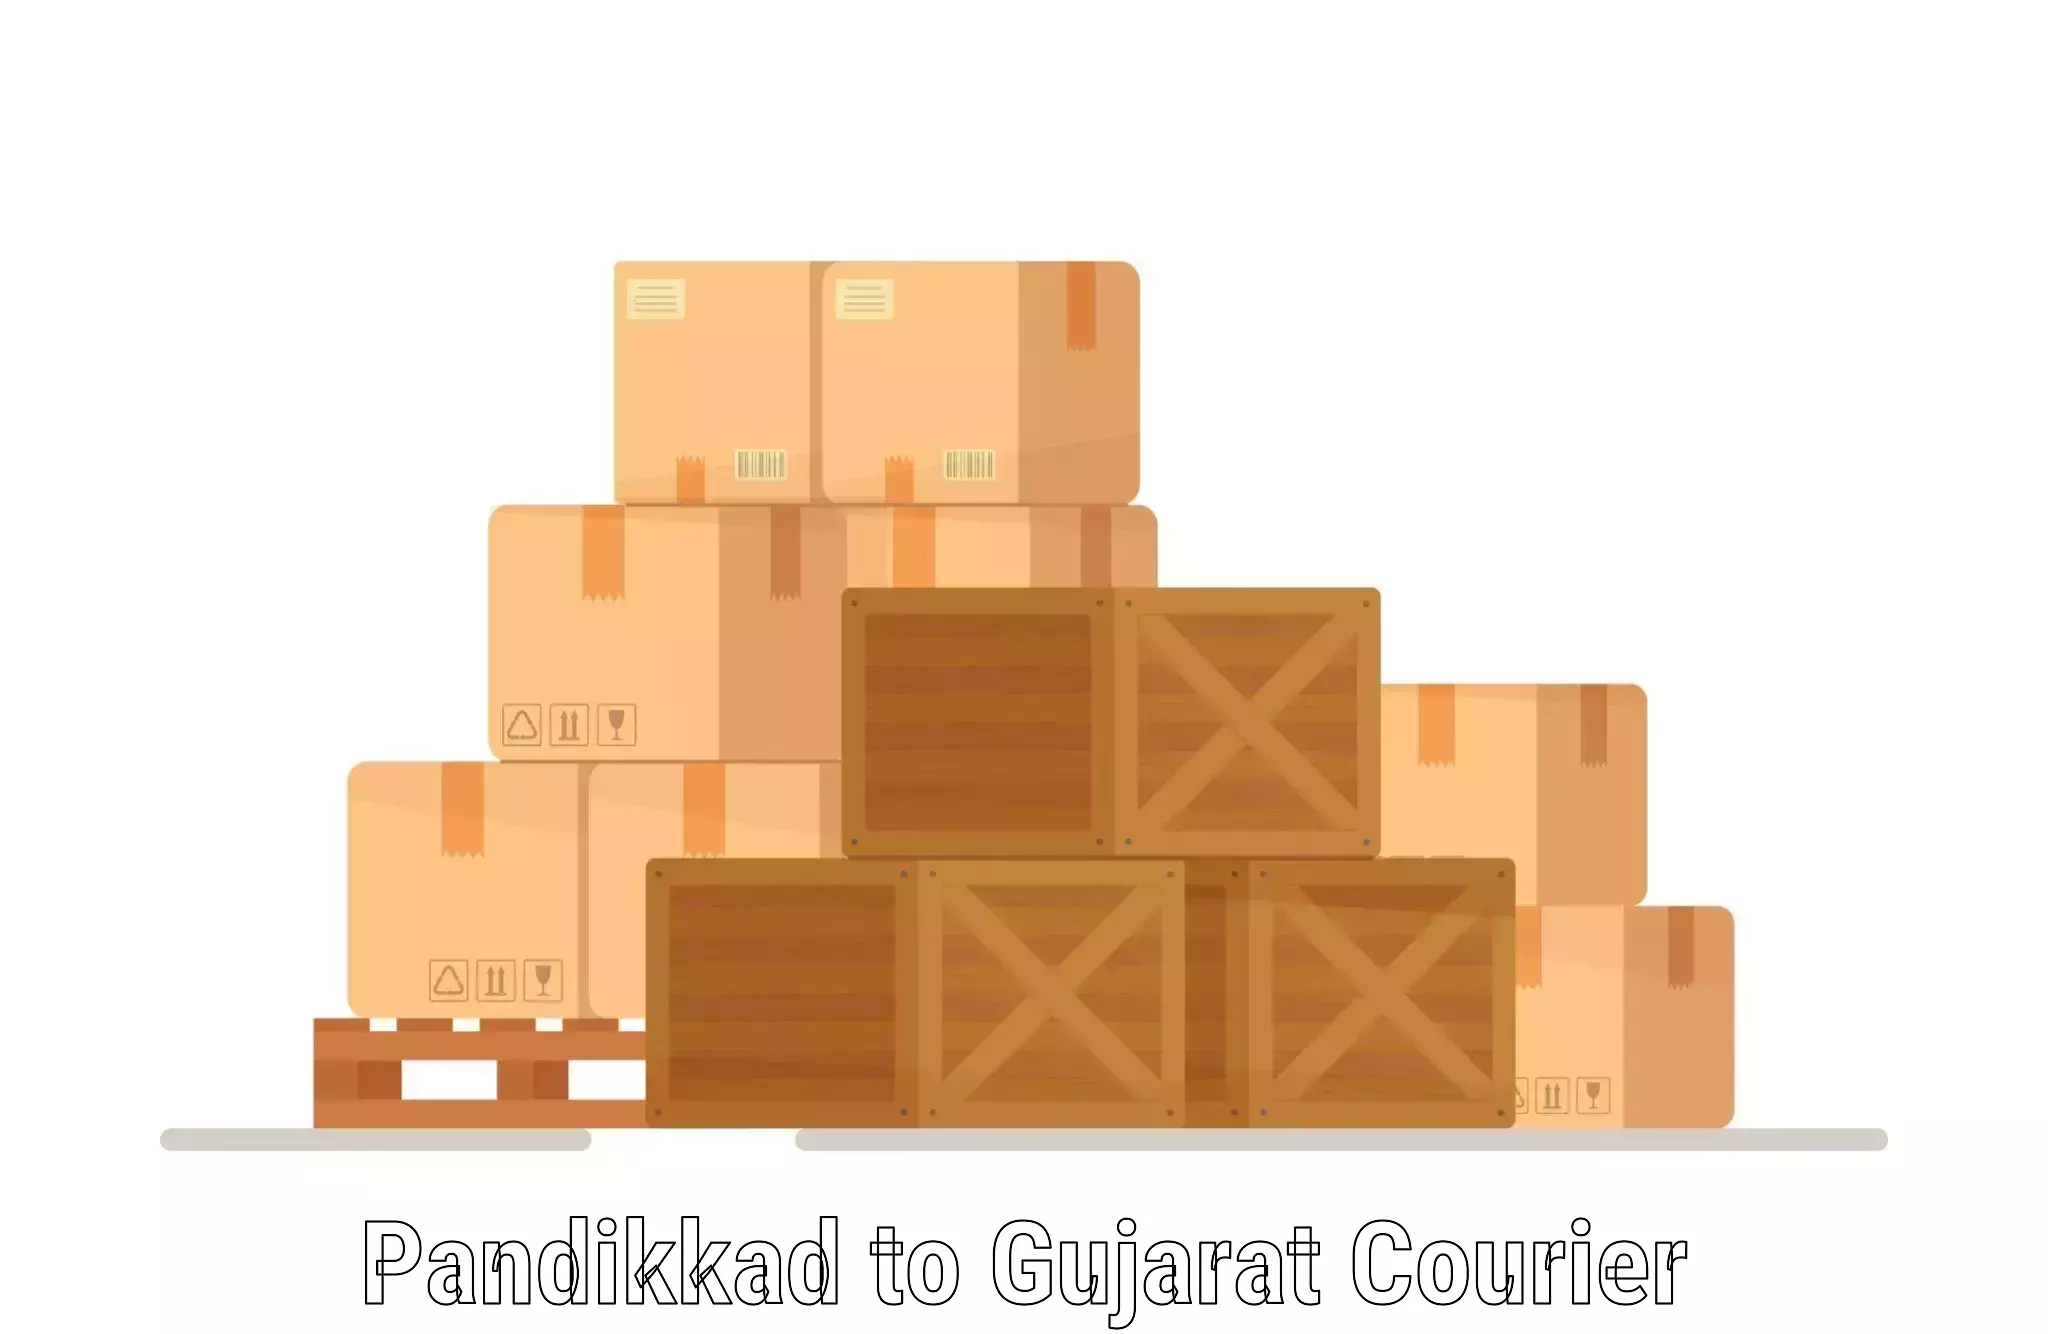 Fast shipping solutions Pandikkad to Amreli